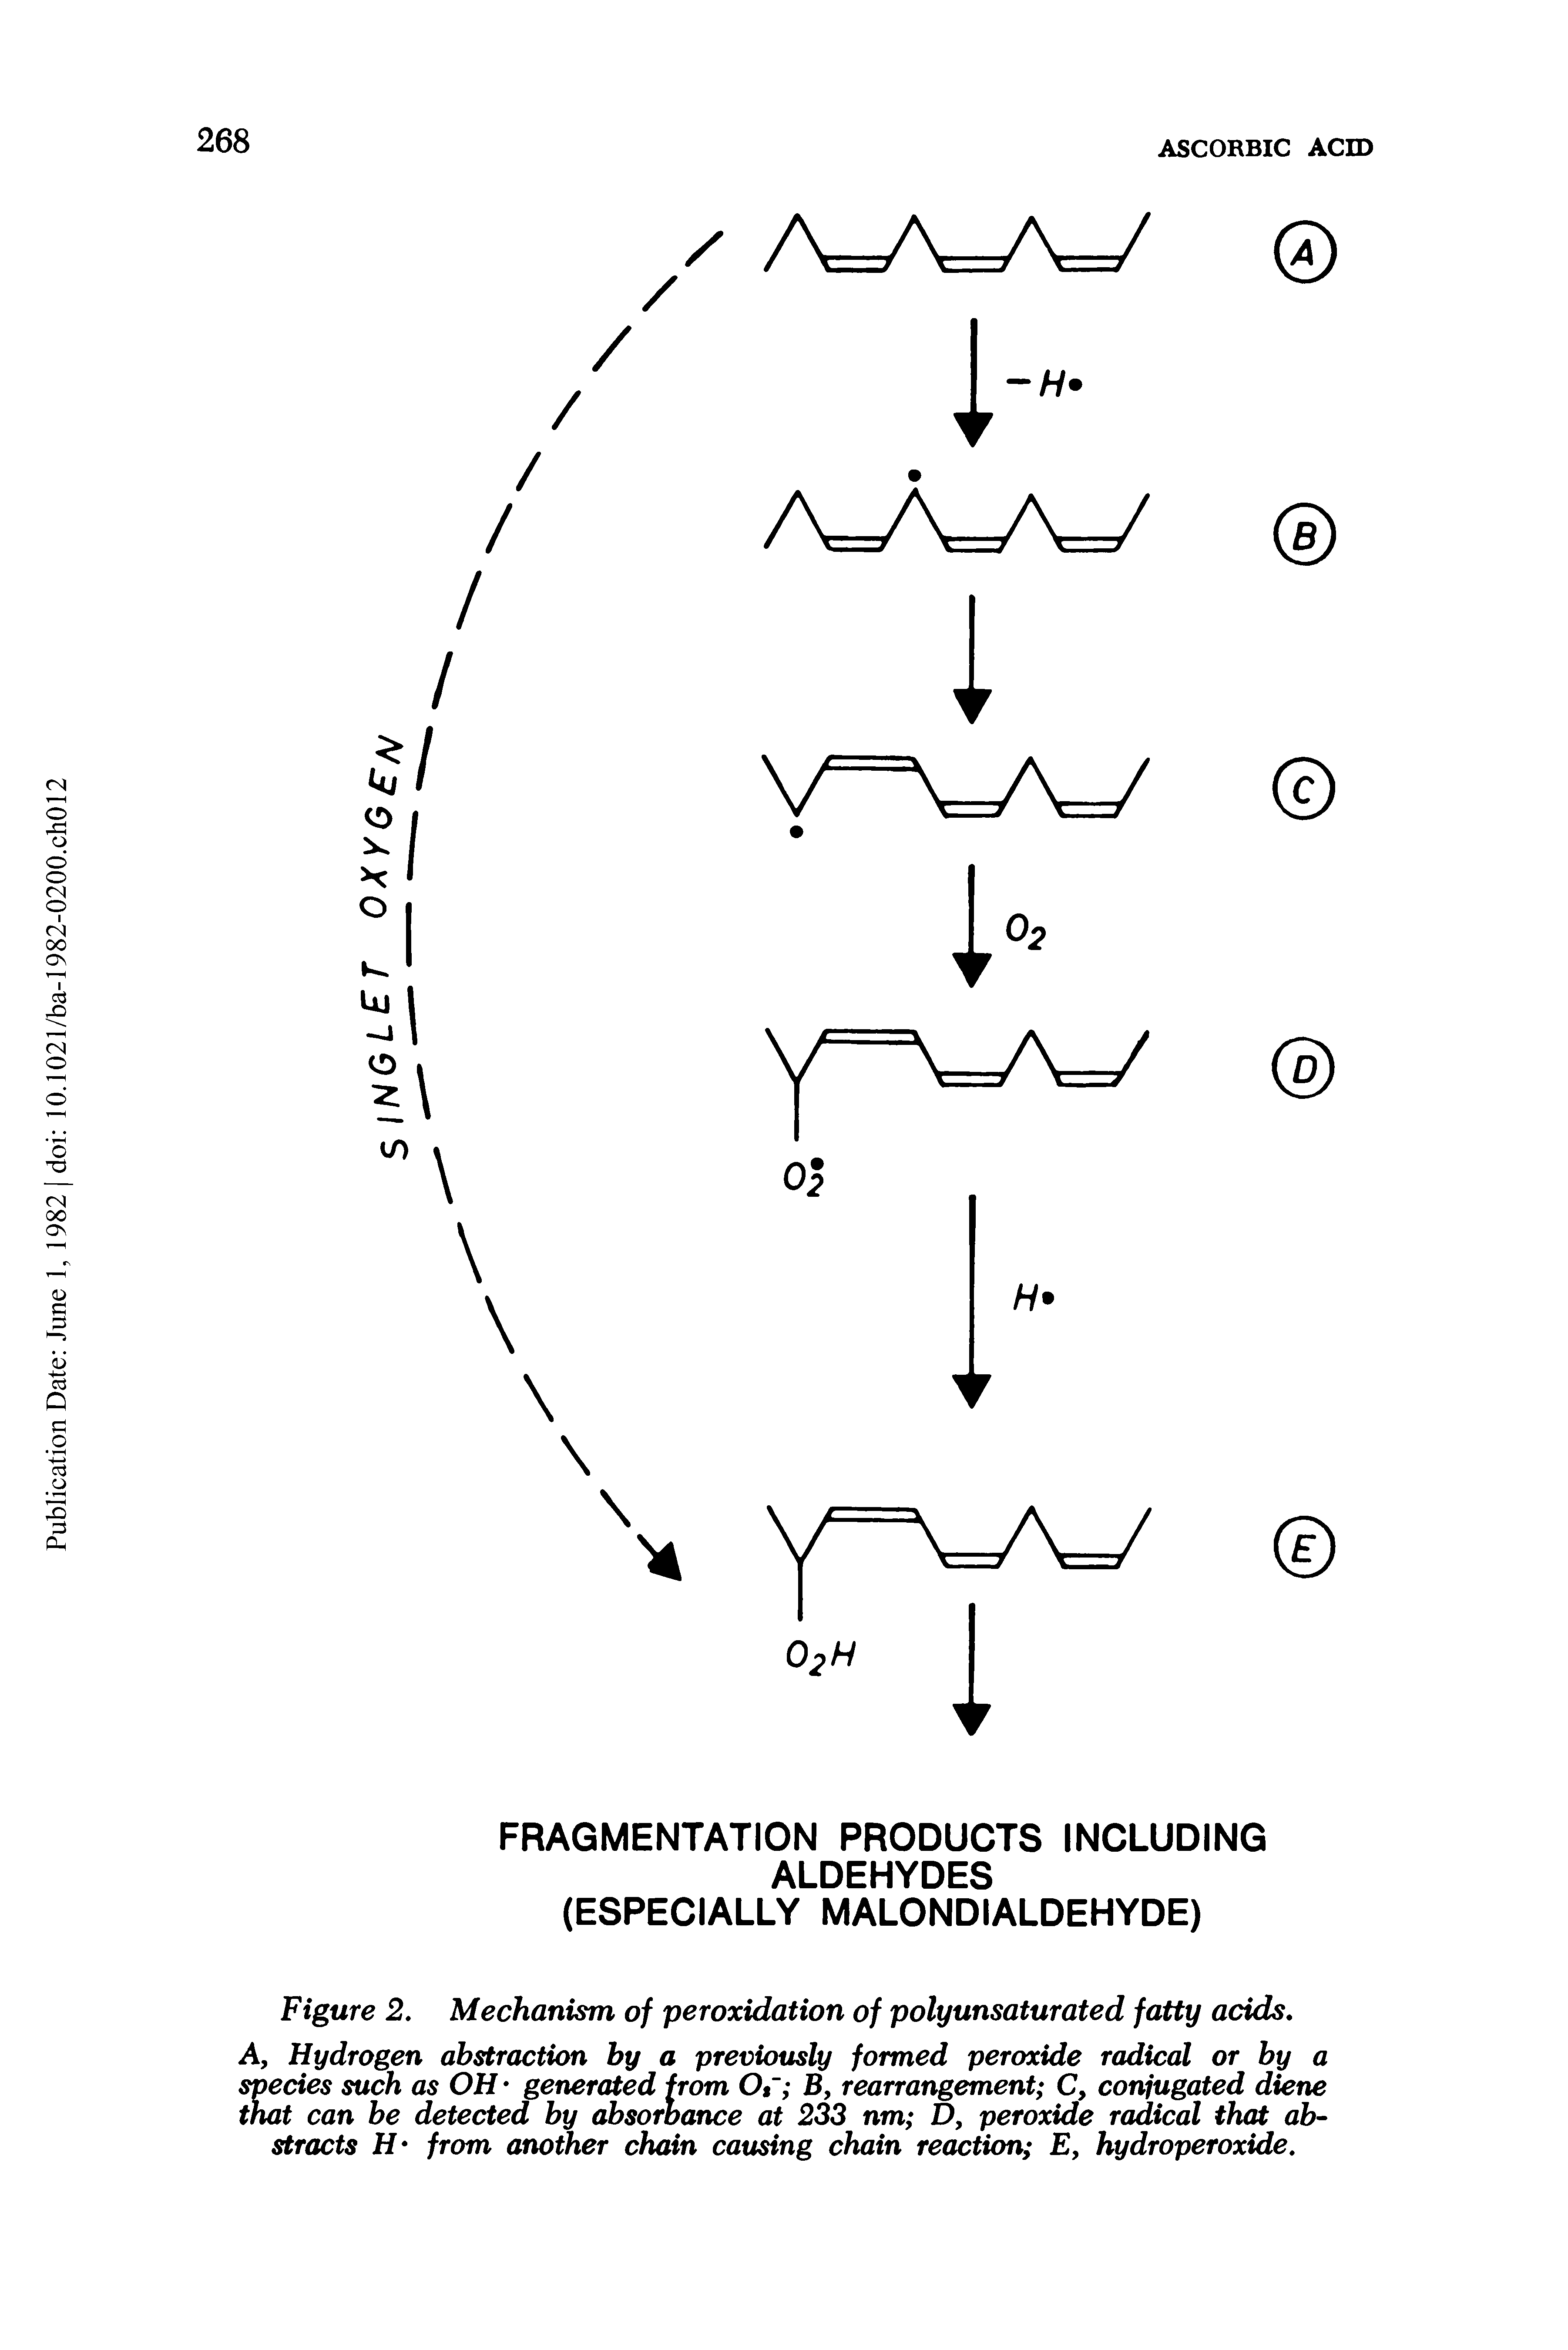 Figure 2. Mechanism of peroxidation of polyunsaturated fatty acids,...